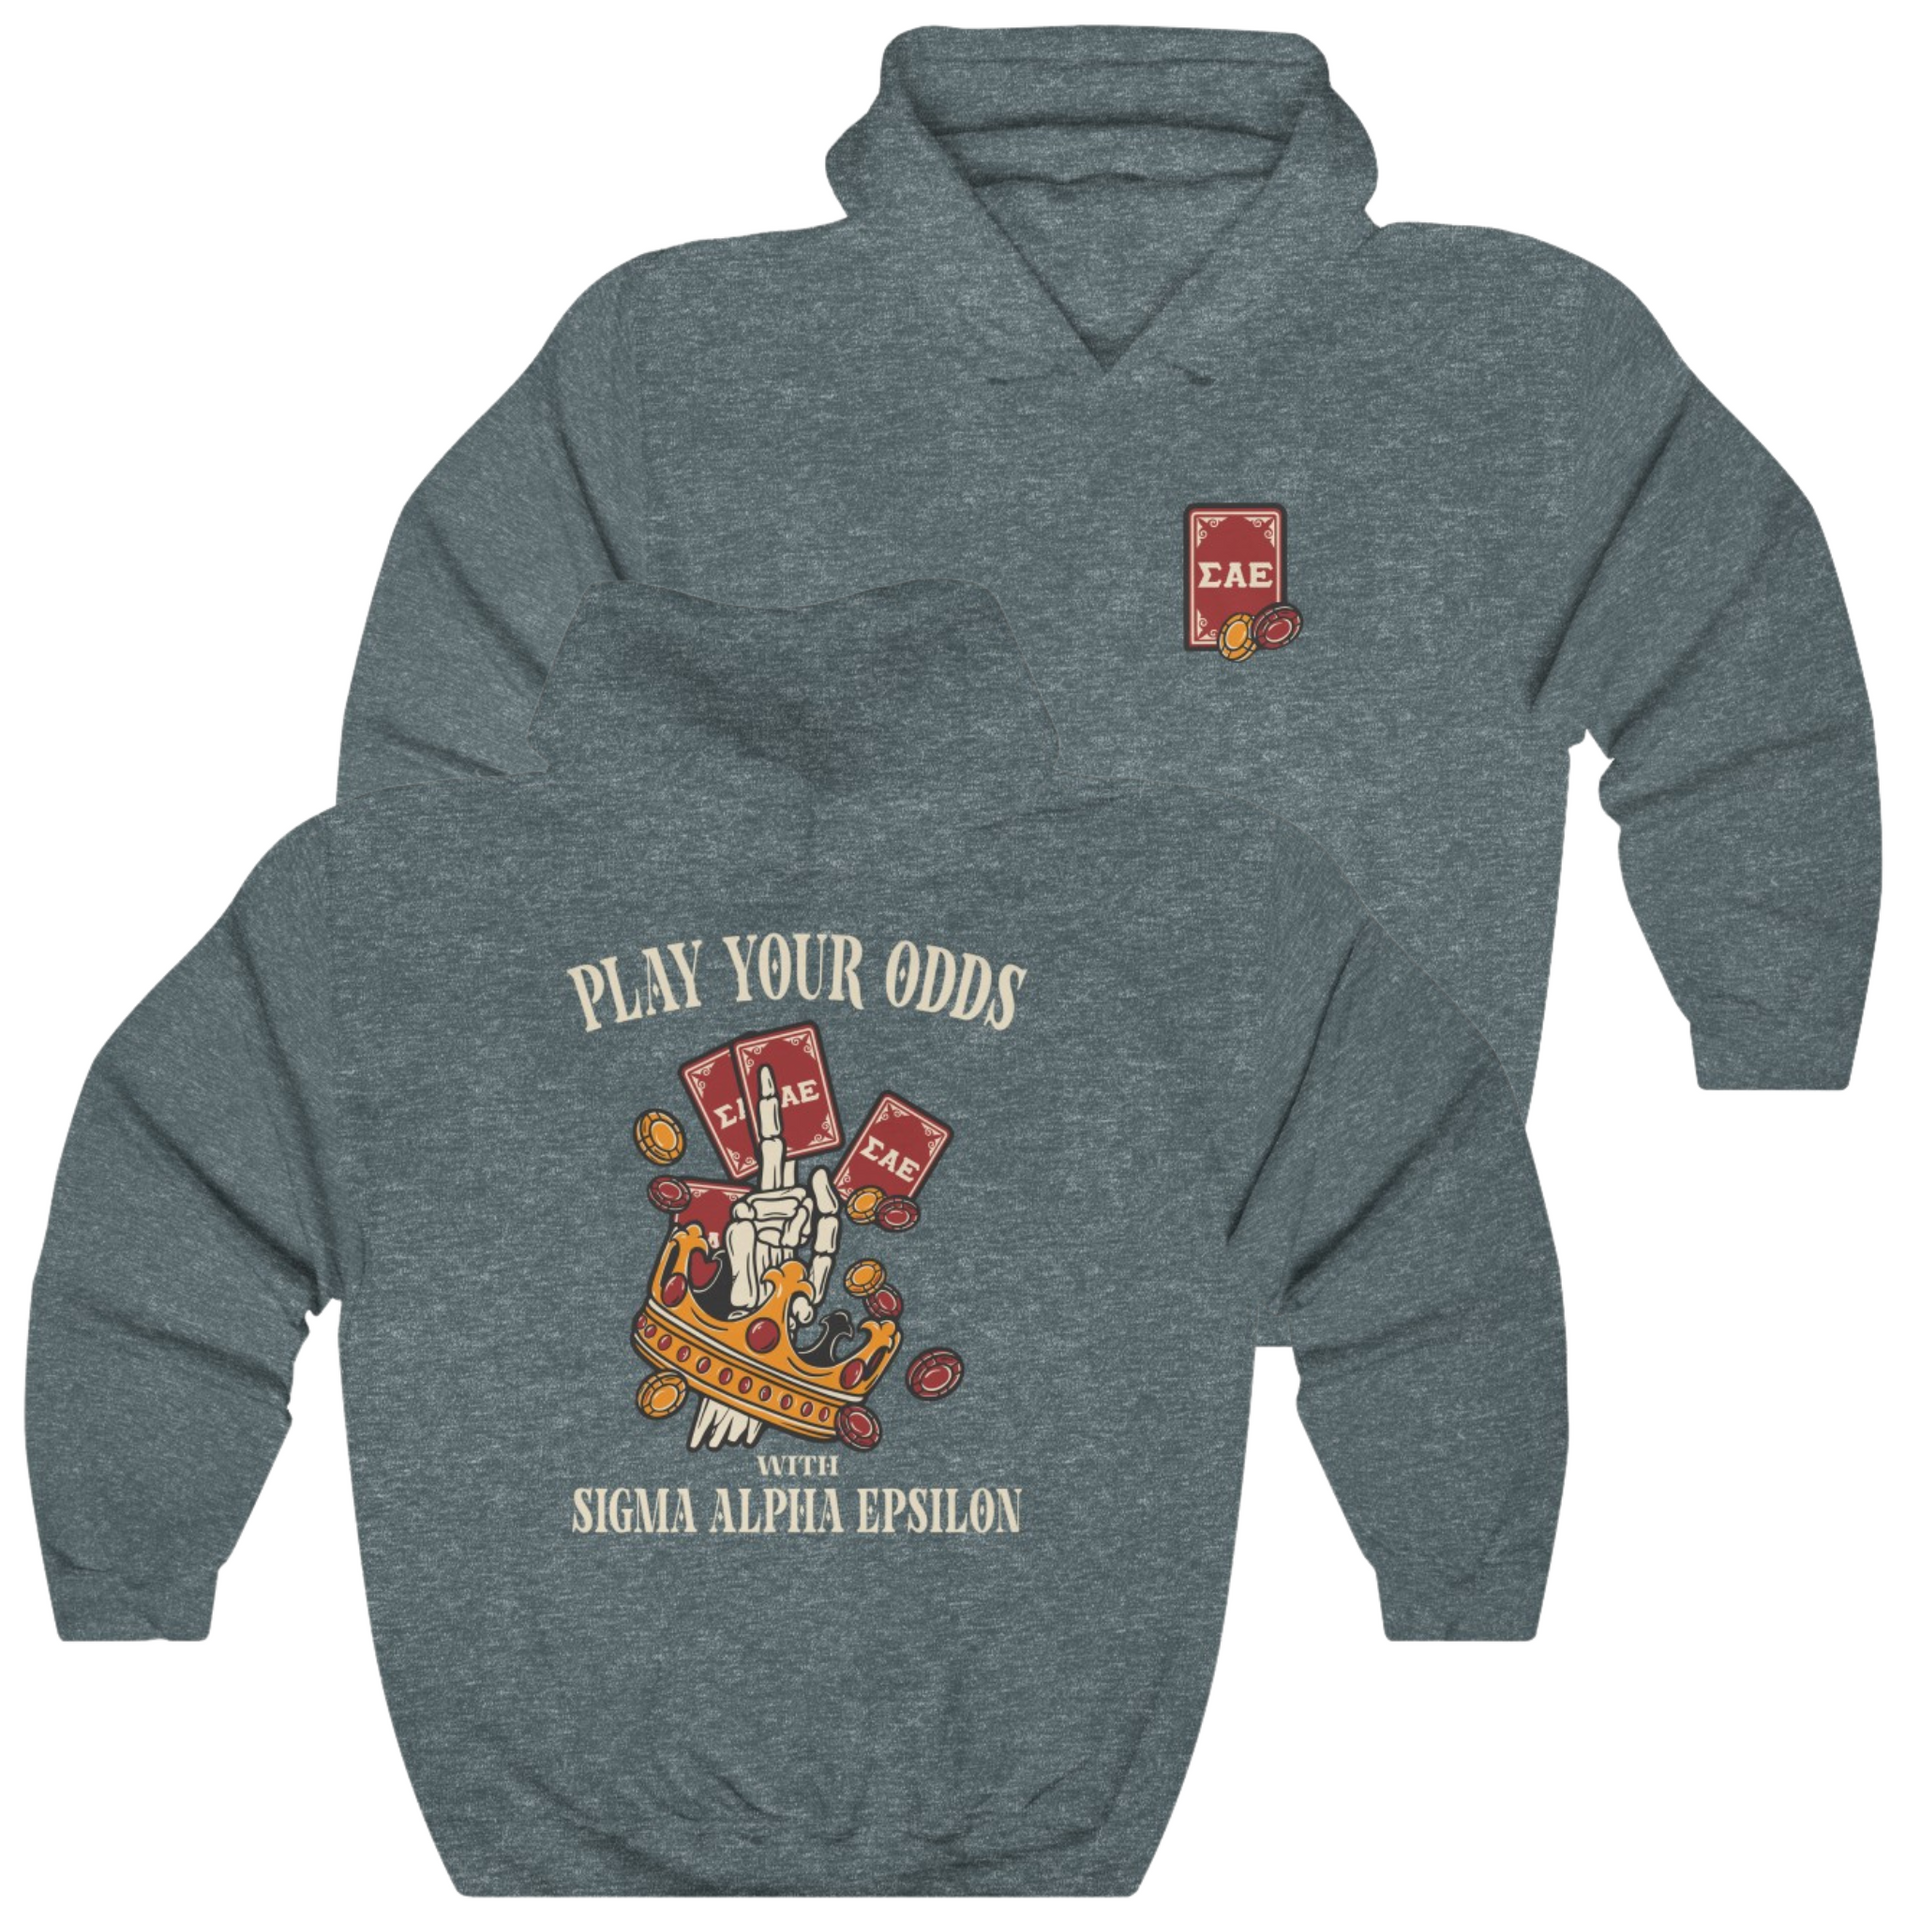 Grey Sigma Alpha Epsilon Graphic Hoodie | Play Your Odds | Sigma Alpha Epsilon Clothing and Merchandise